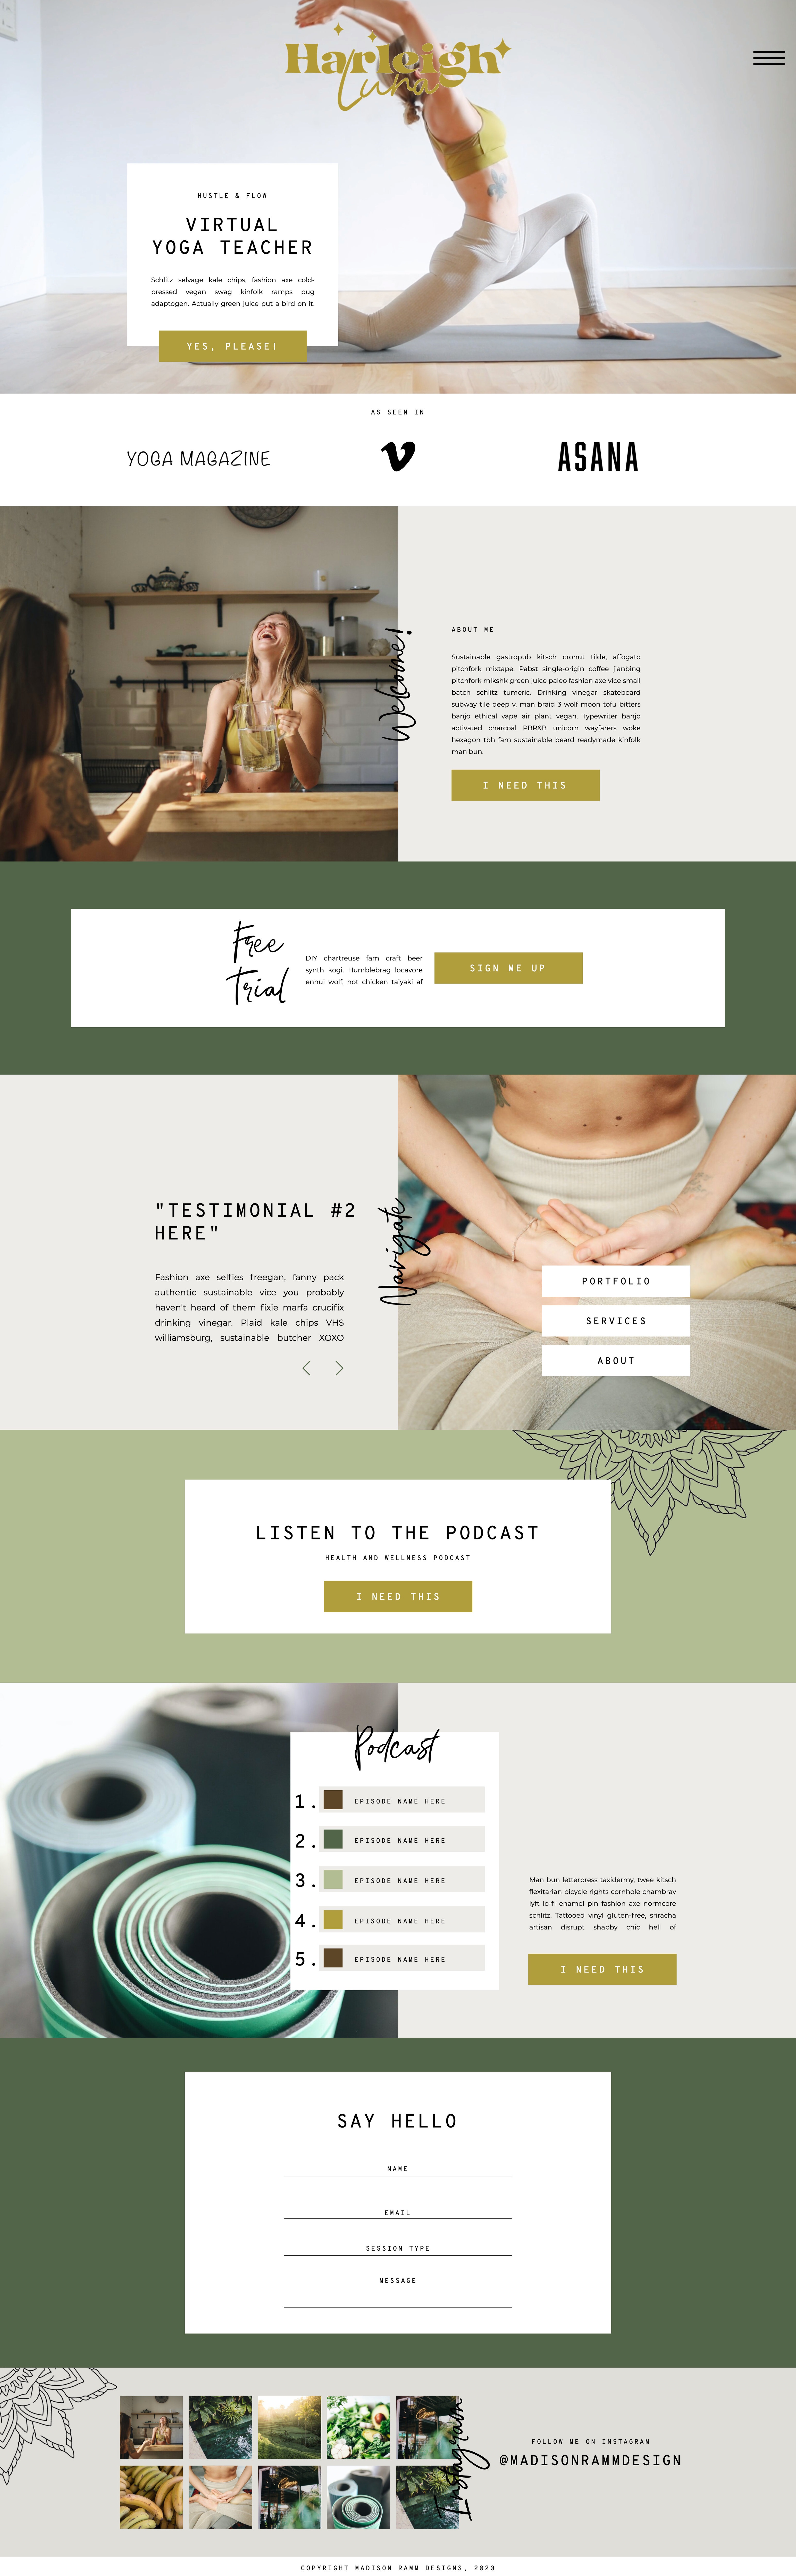 Yoga Teacher Website | Madison Ramm Design